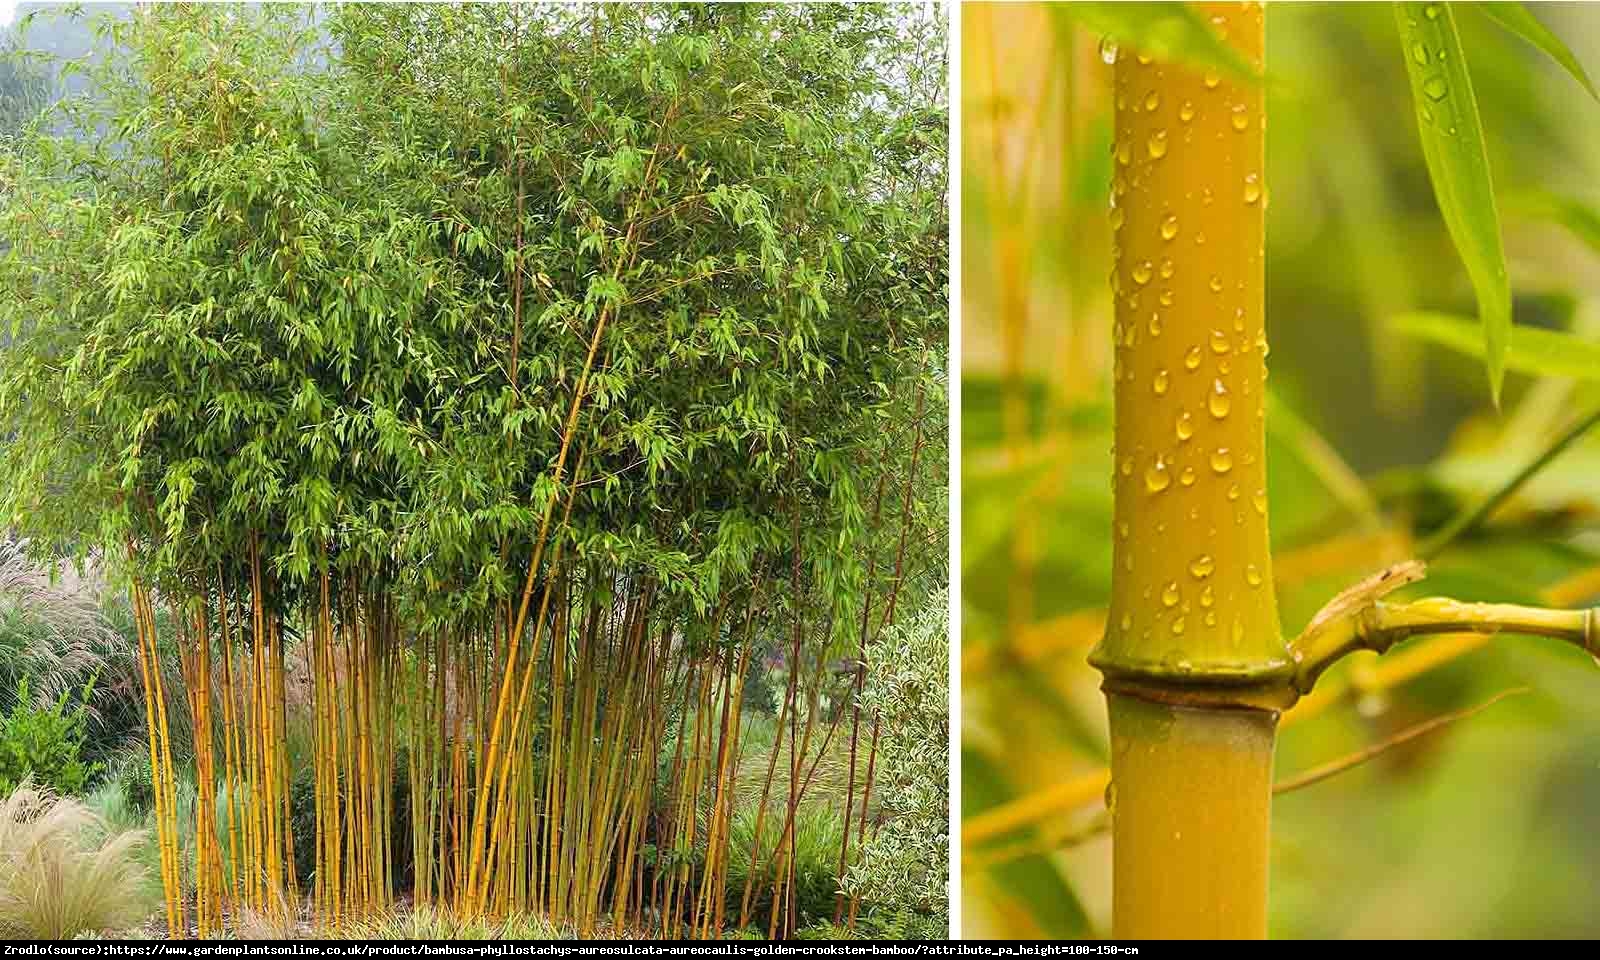 Bambus ogrodowy - ZŁOTO - ŻÓŁTE łodygi, MROZOODPORNY!!! - Phyllostachys aureosulcata ‘Aureocaulis’